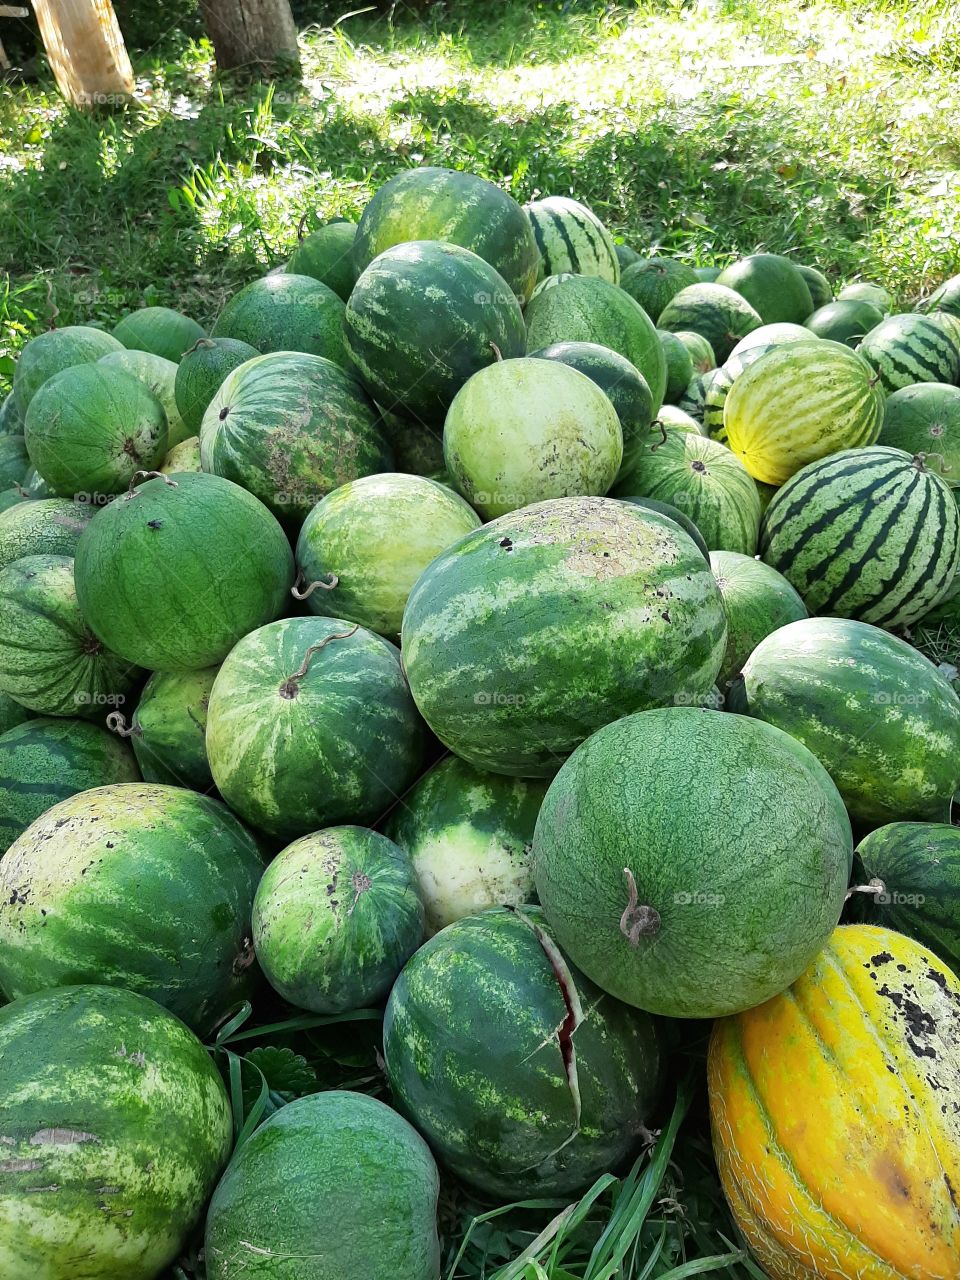 harvest ot watermelons